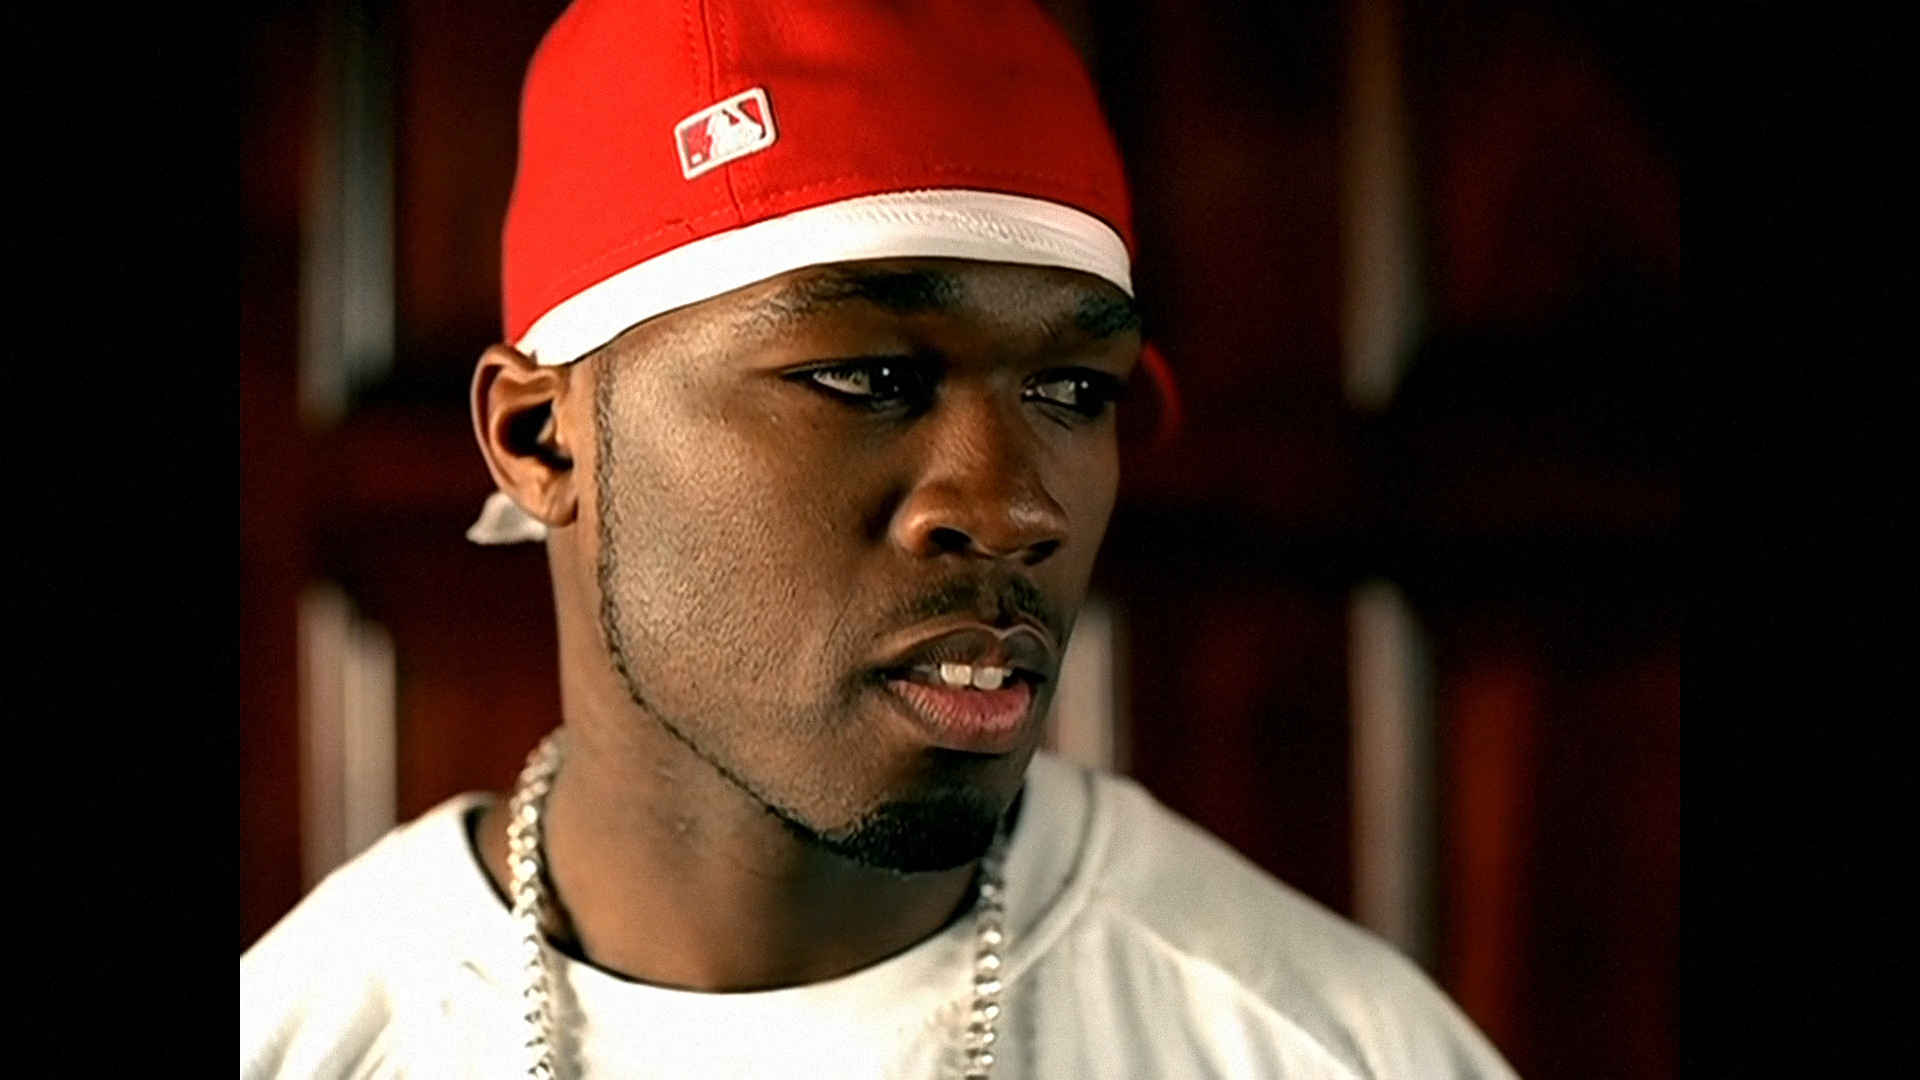 50 Cent: The fourth studio album, Before I Self Destruct, was released November 9, 2009. 1920x1080 Full HD Wallpaper.